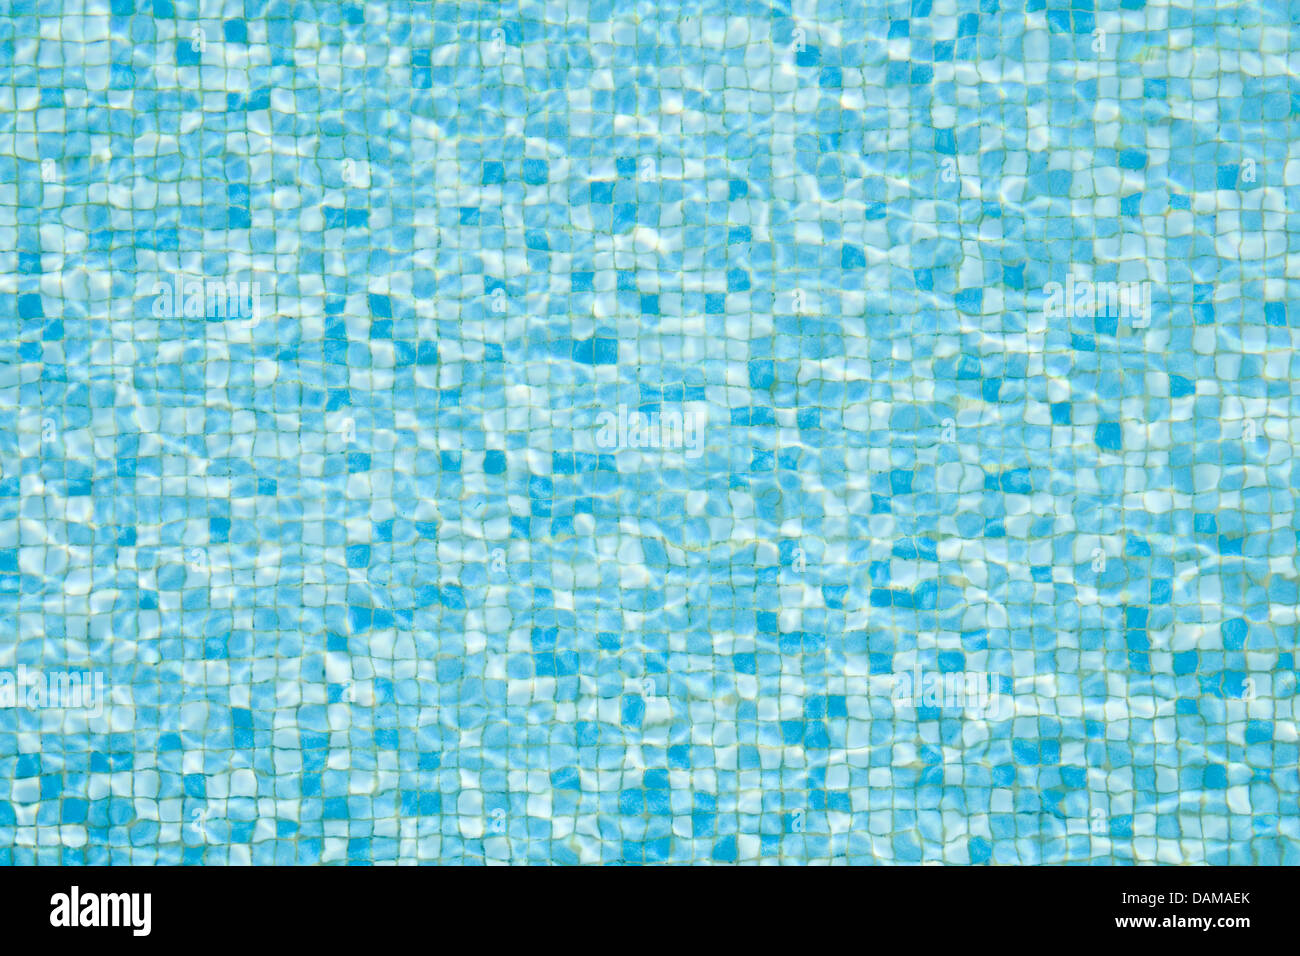 blue summer swimming pool mosaic texture Stock Photo